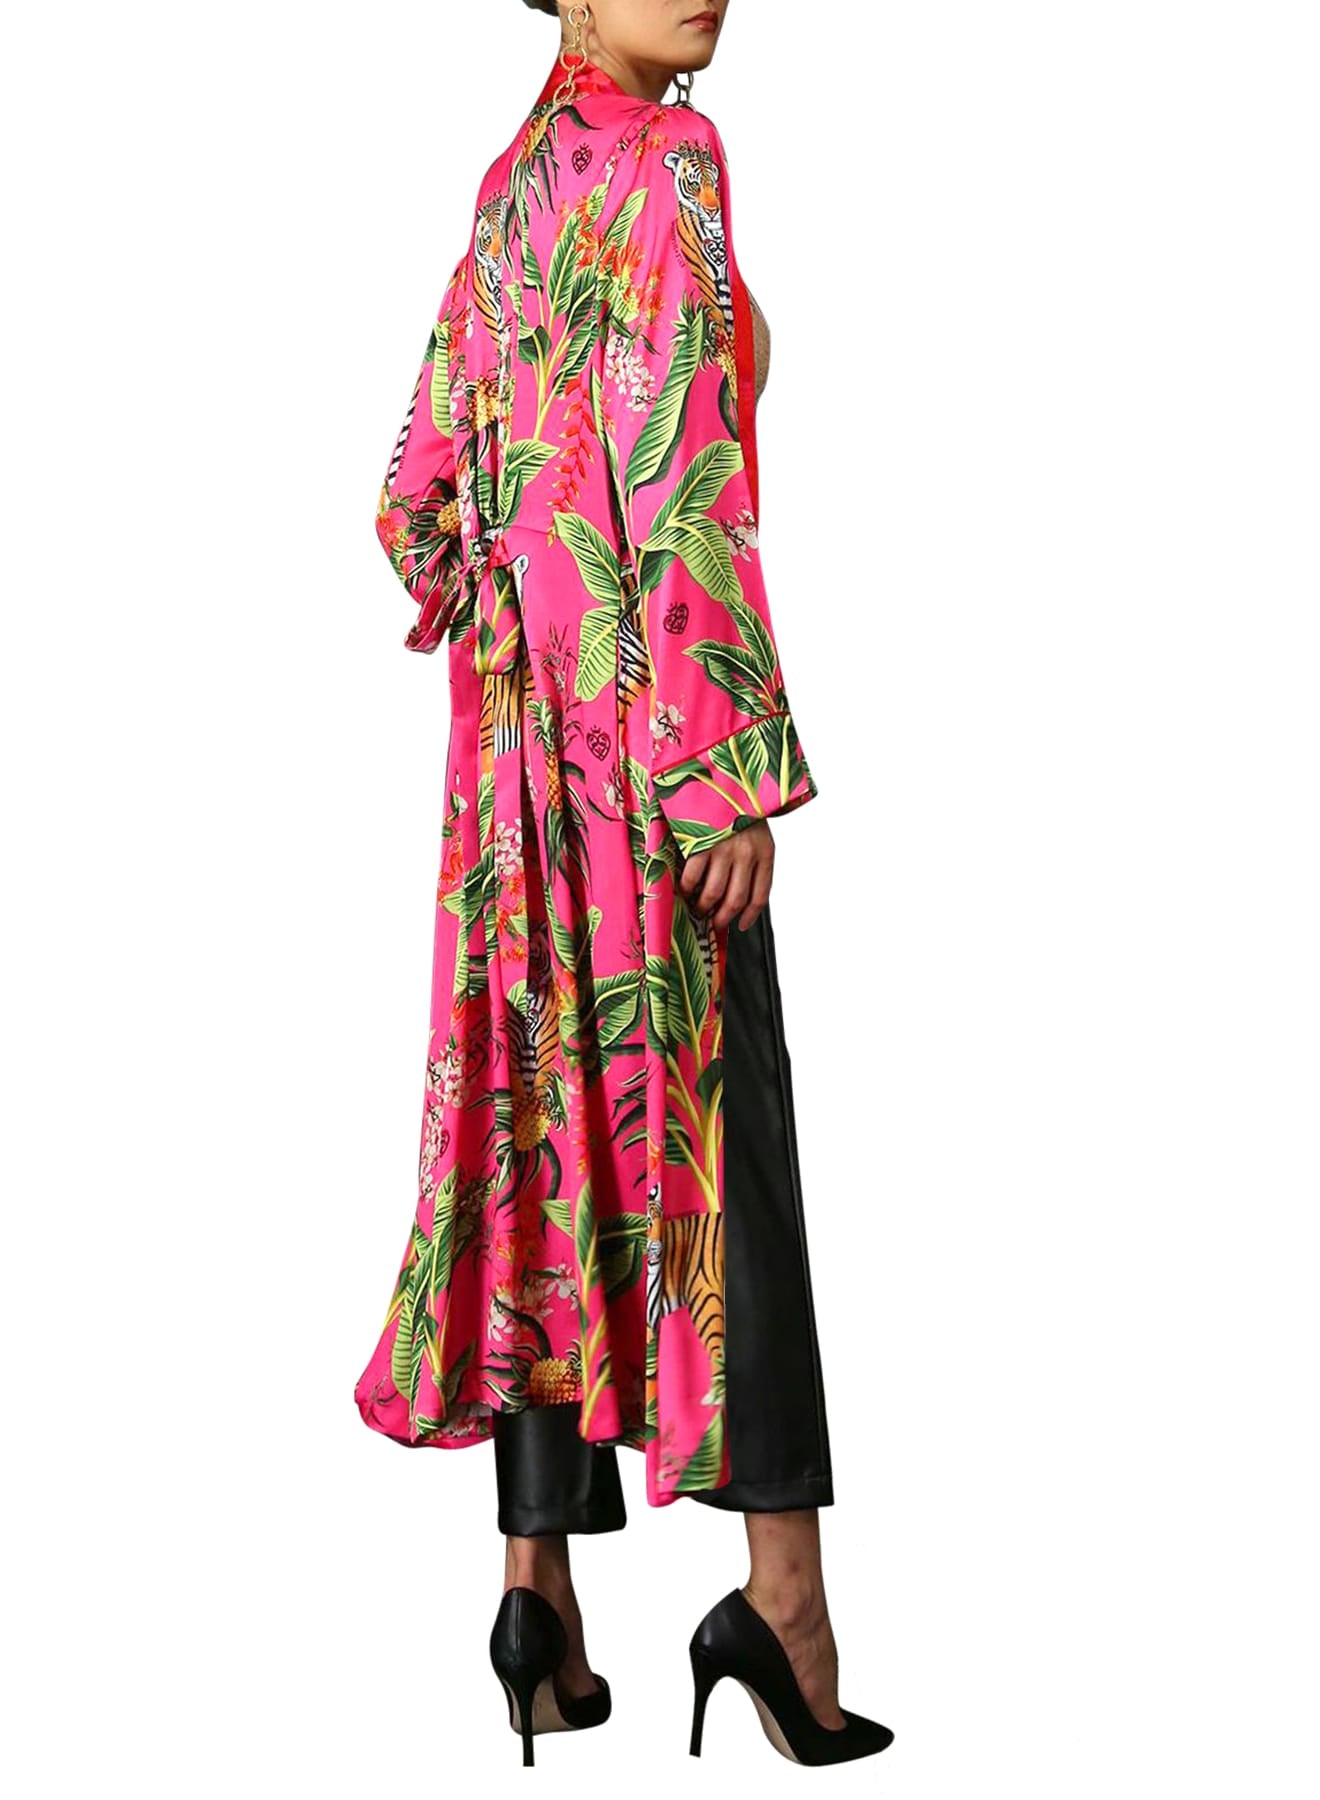 "Kyle X Shahida" "silk kimono for women" "womens kimono robes" "kimono silk robes for women" "long kimono silk robe"